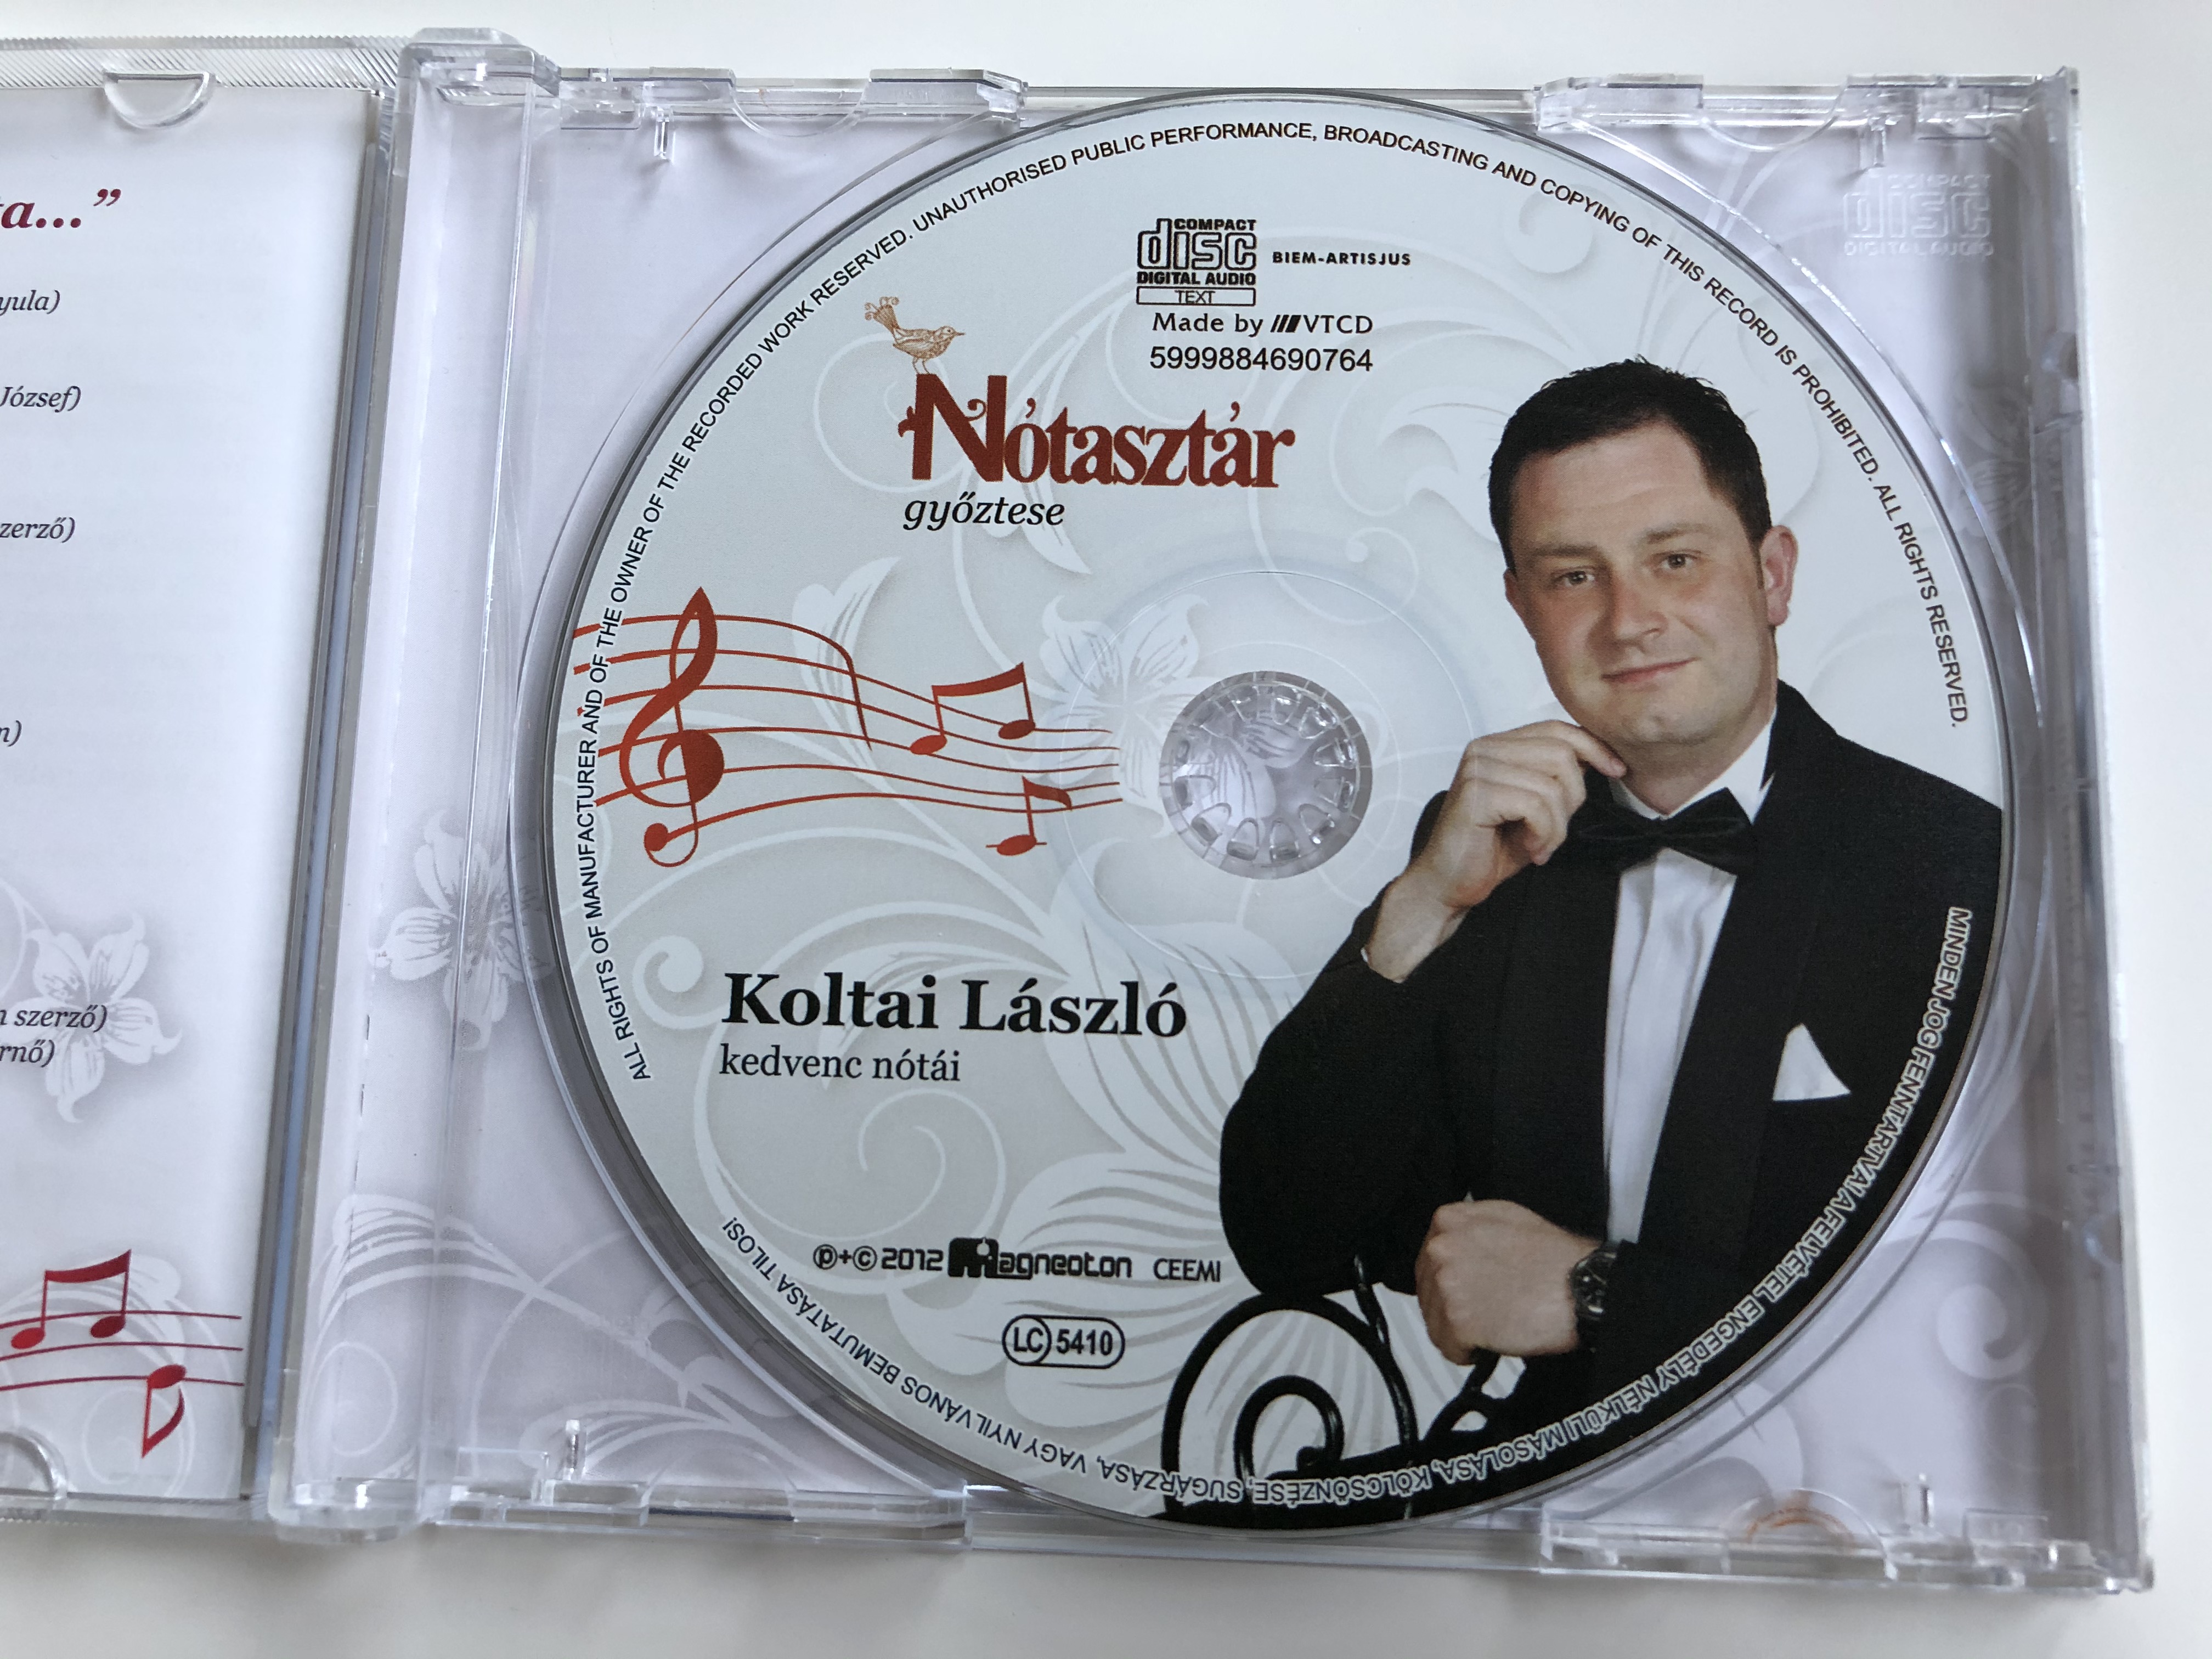 notasztar-gyoztese-koltai-laszlo-kedvenc-notai-magneoton-audio-cd-2012-5999884690764-4-.jpg